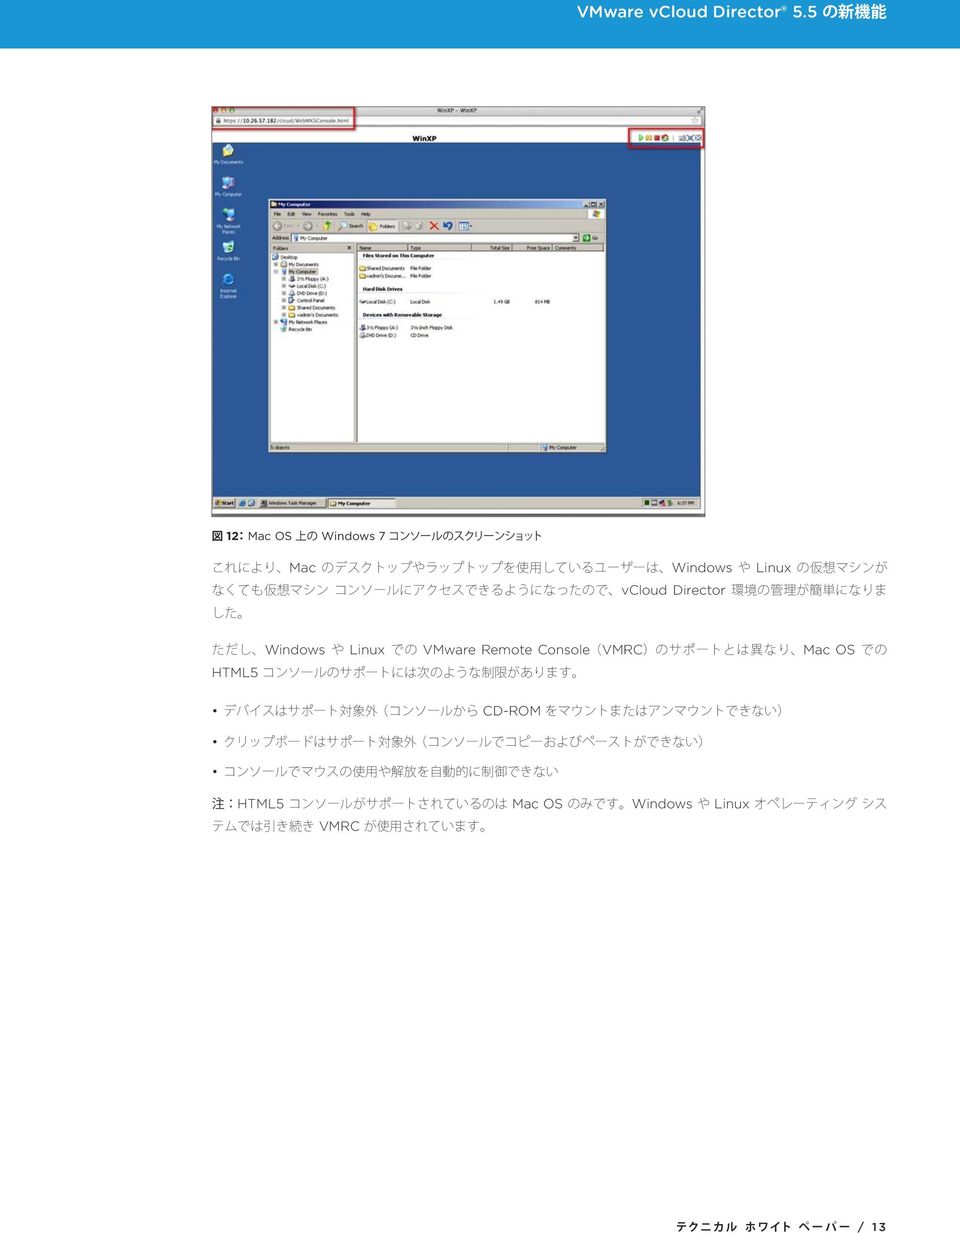 Remote Console VMRC Mac OS HTML5